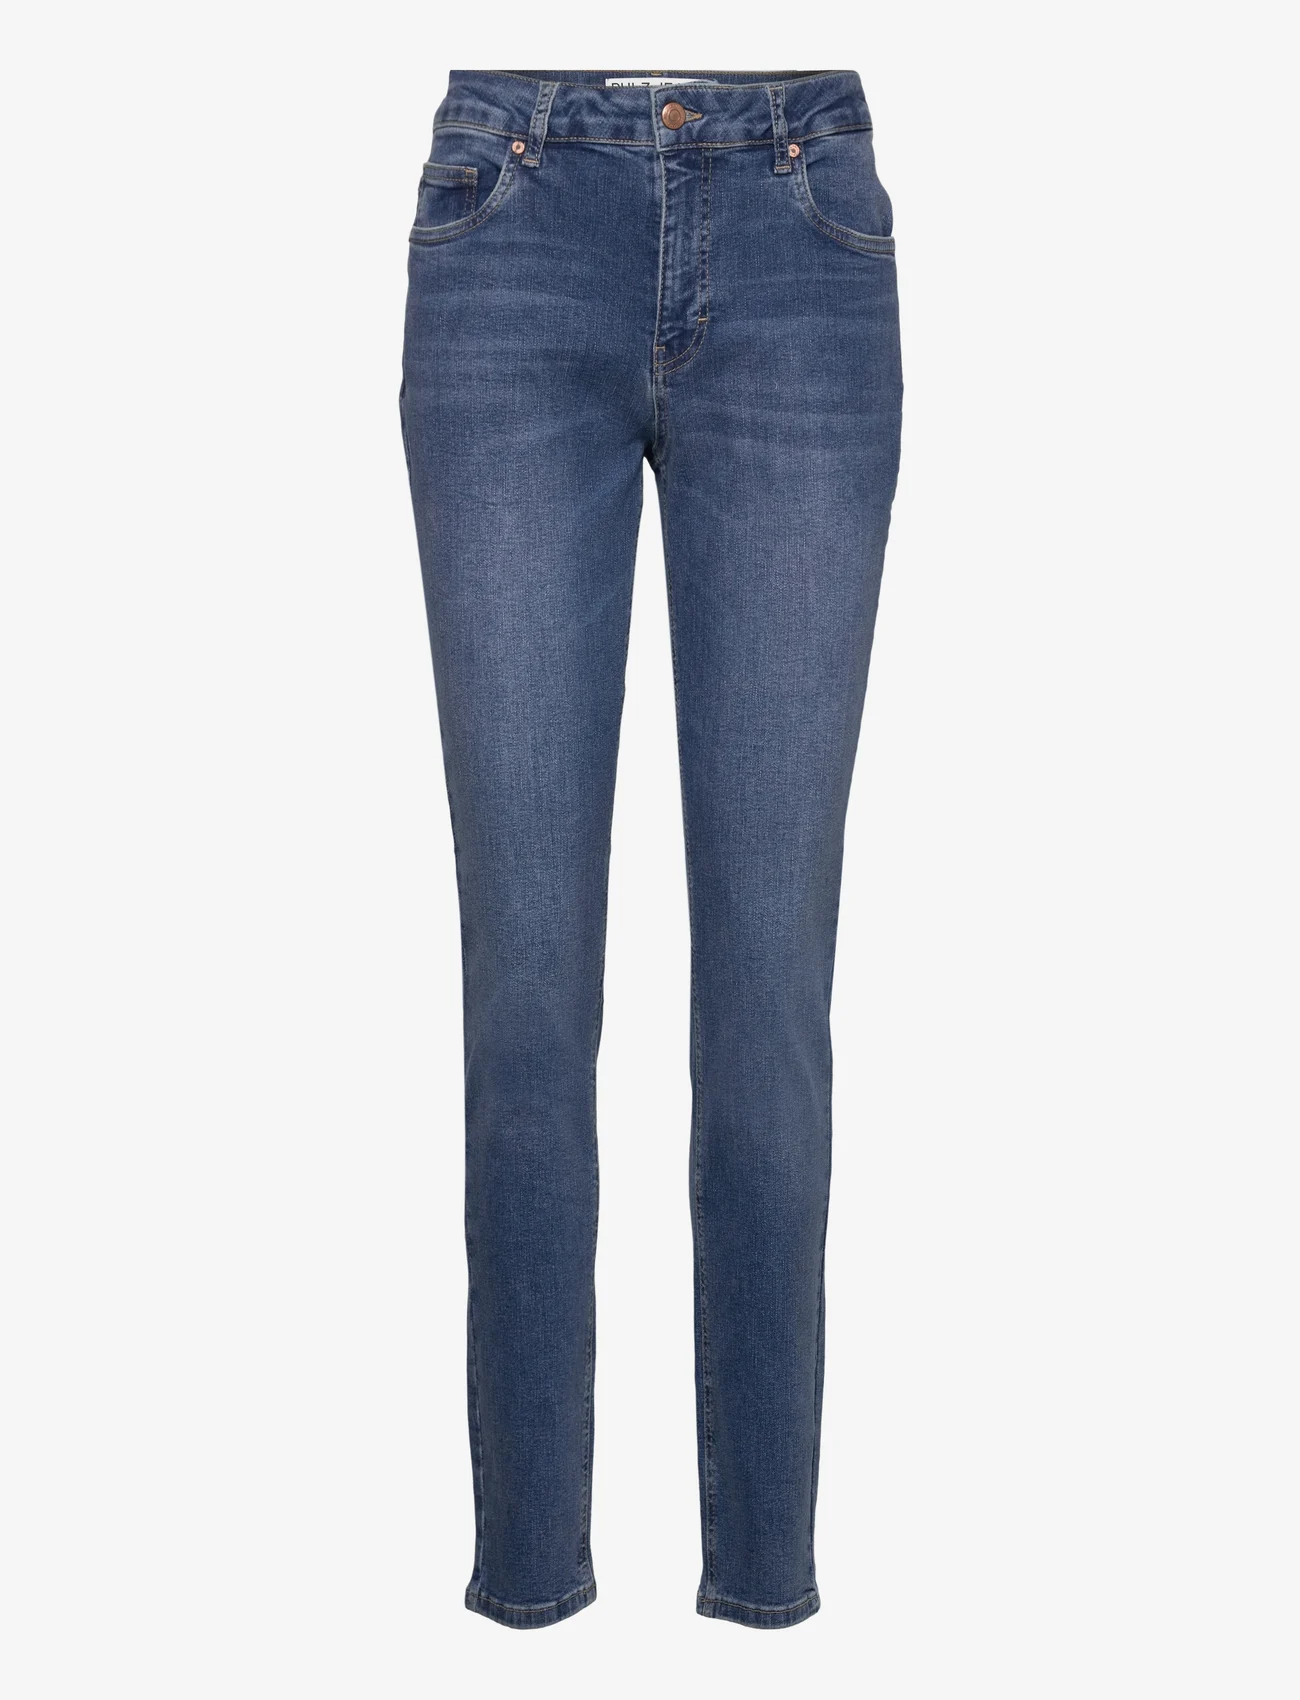 Pulz Jeans - PZJOY HW Jeans Skinny Leg - dżinsy skinny fit - medium blue denim - 0